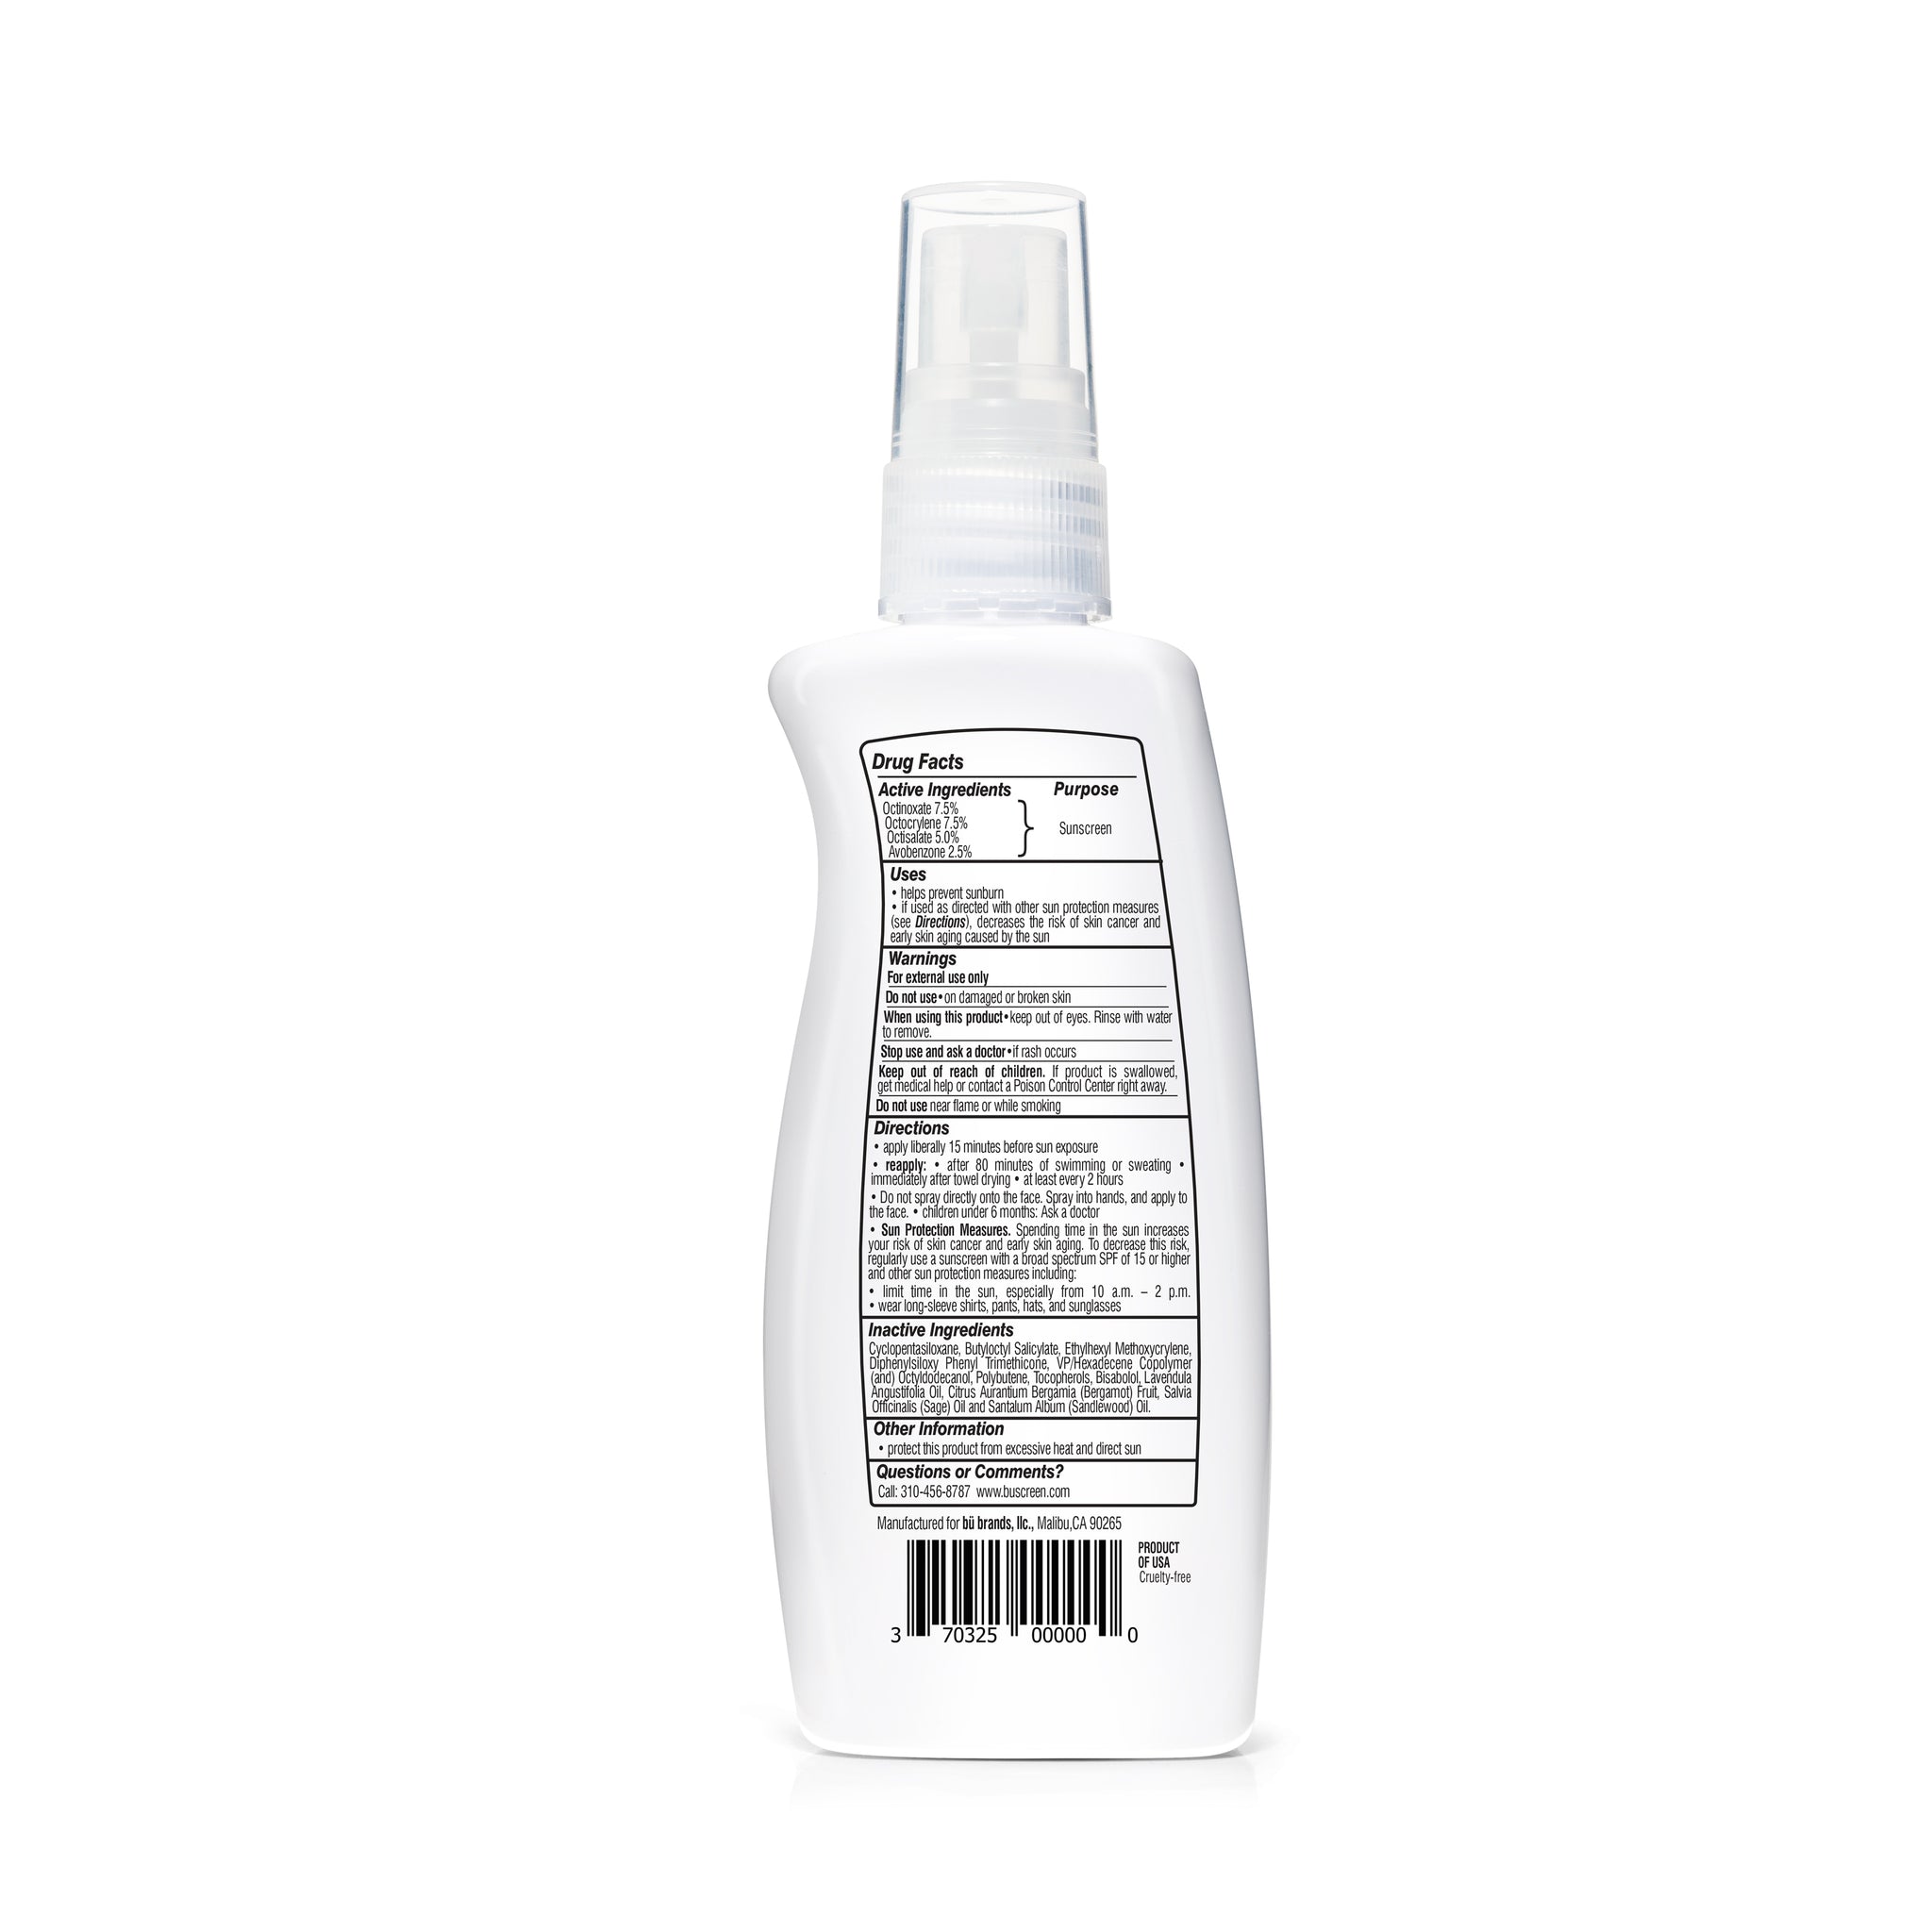 Bu SPF 30 Ultrafine WOWmist Sunscreen - White Sage